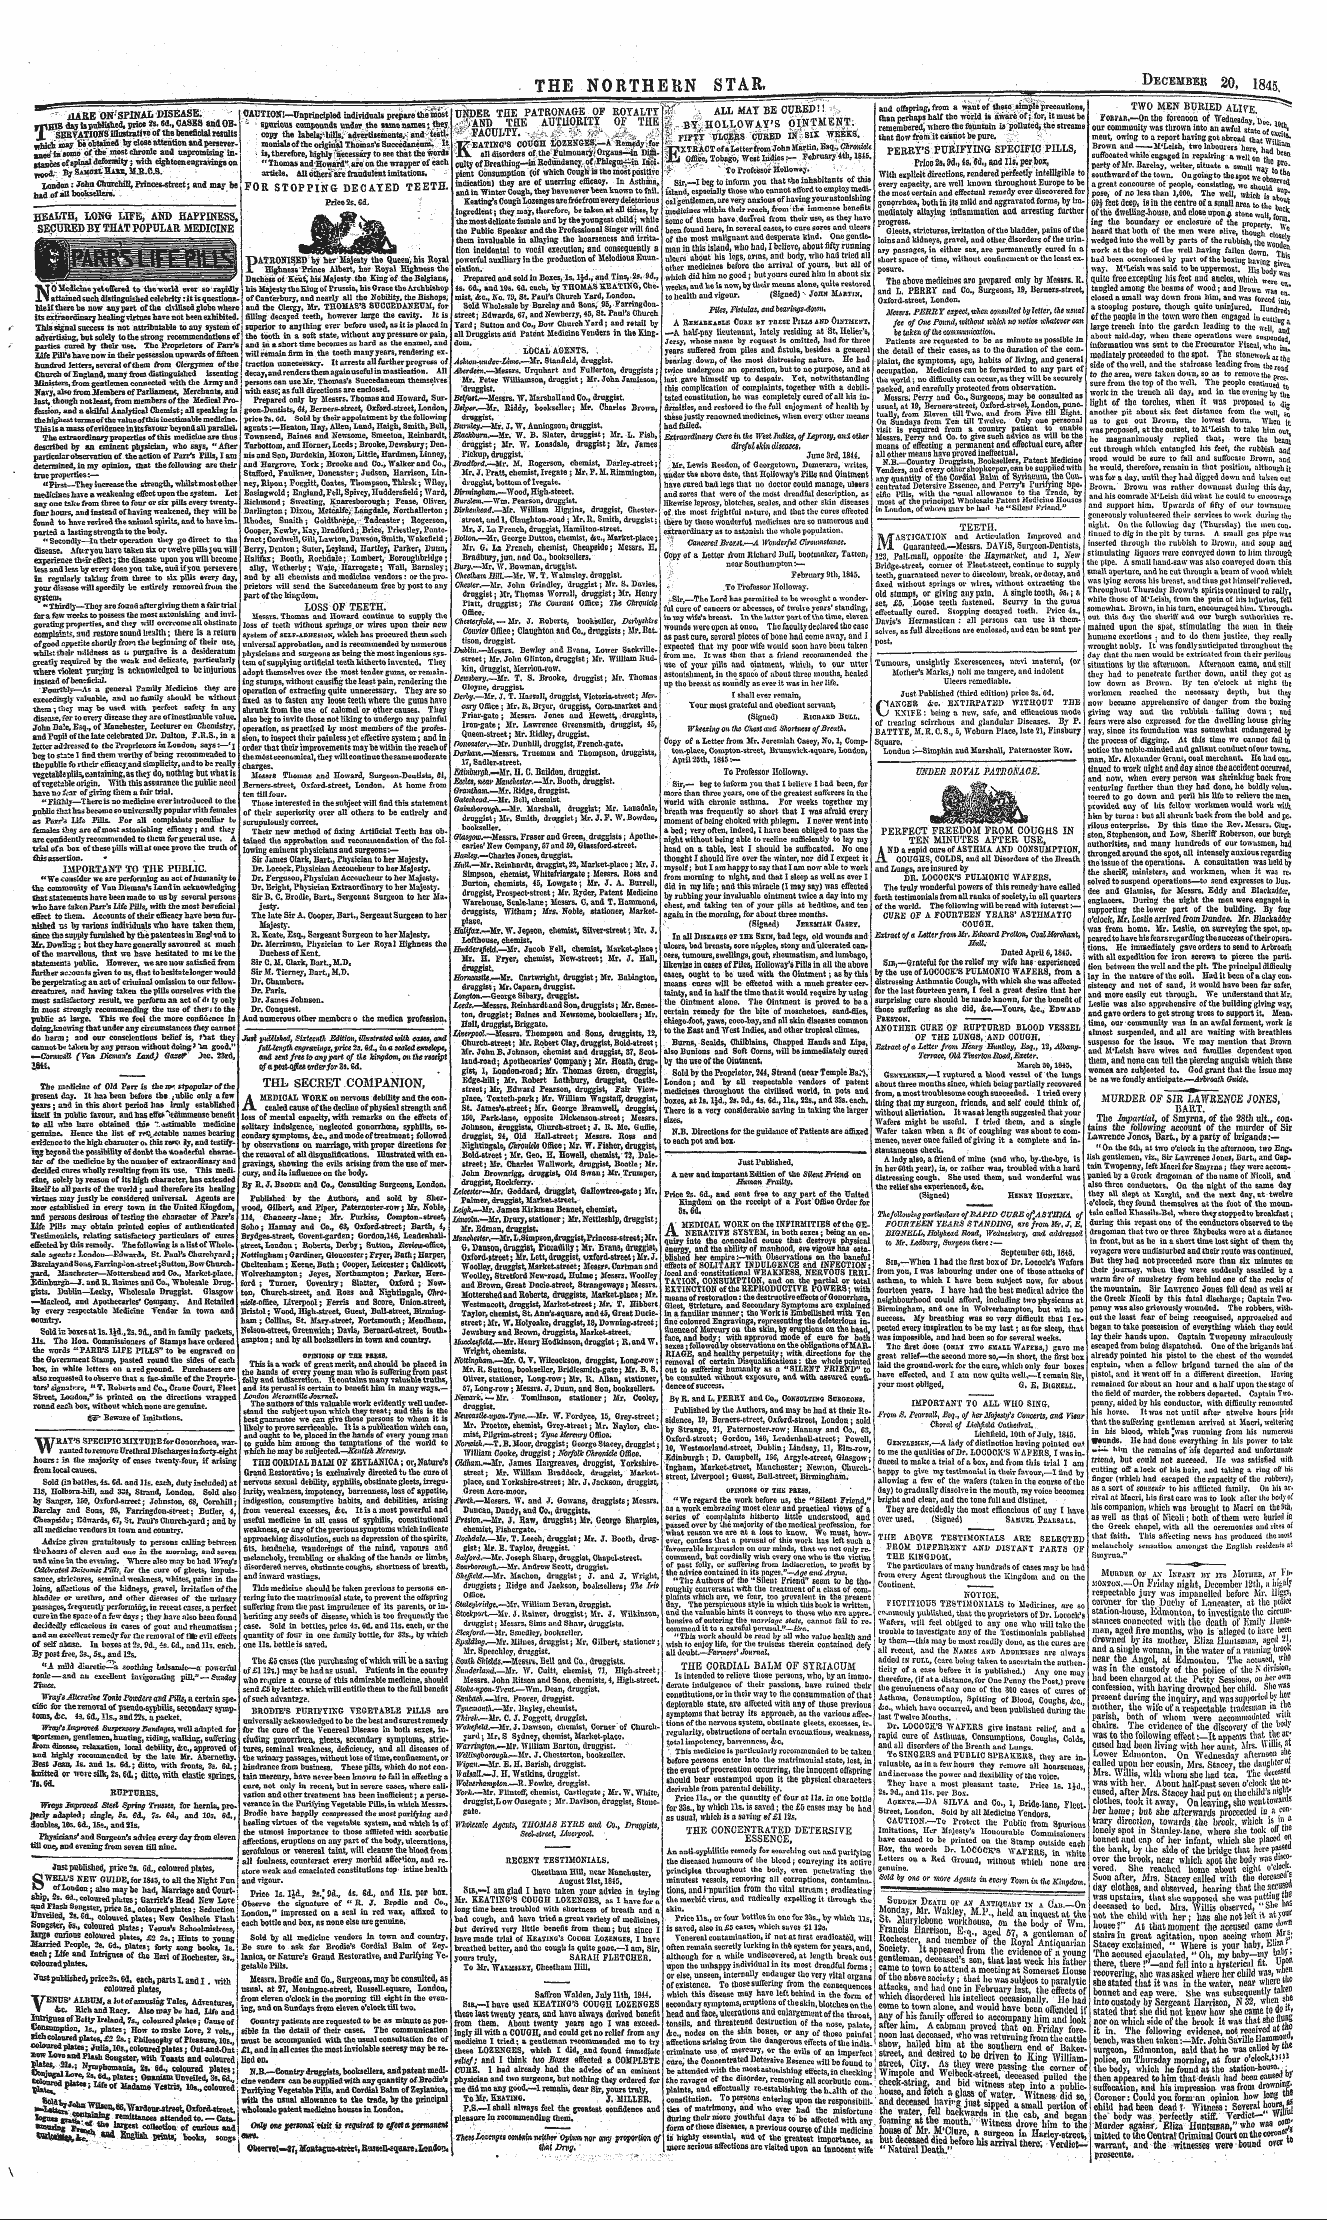 Northern Star (1837-1852): jS F Y, 4th edition - Ad00205